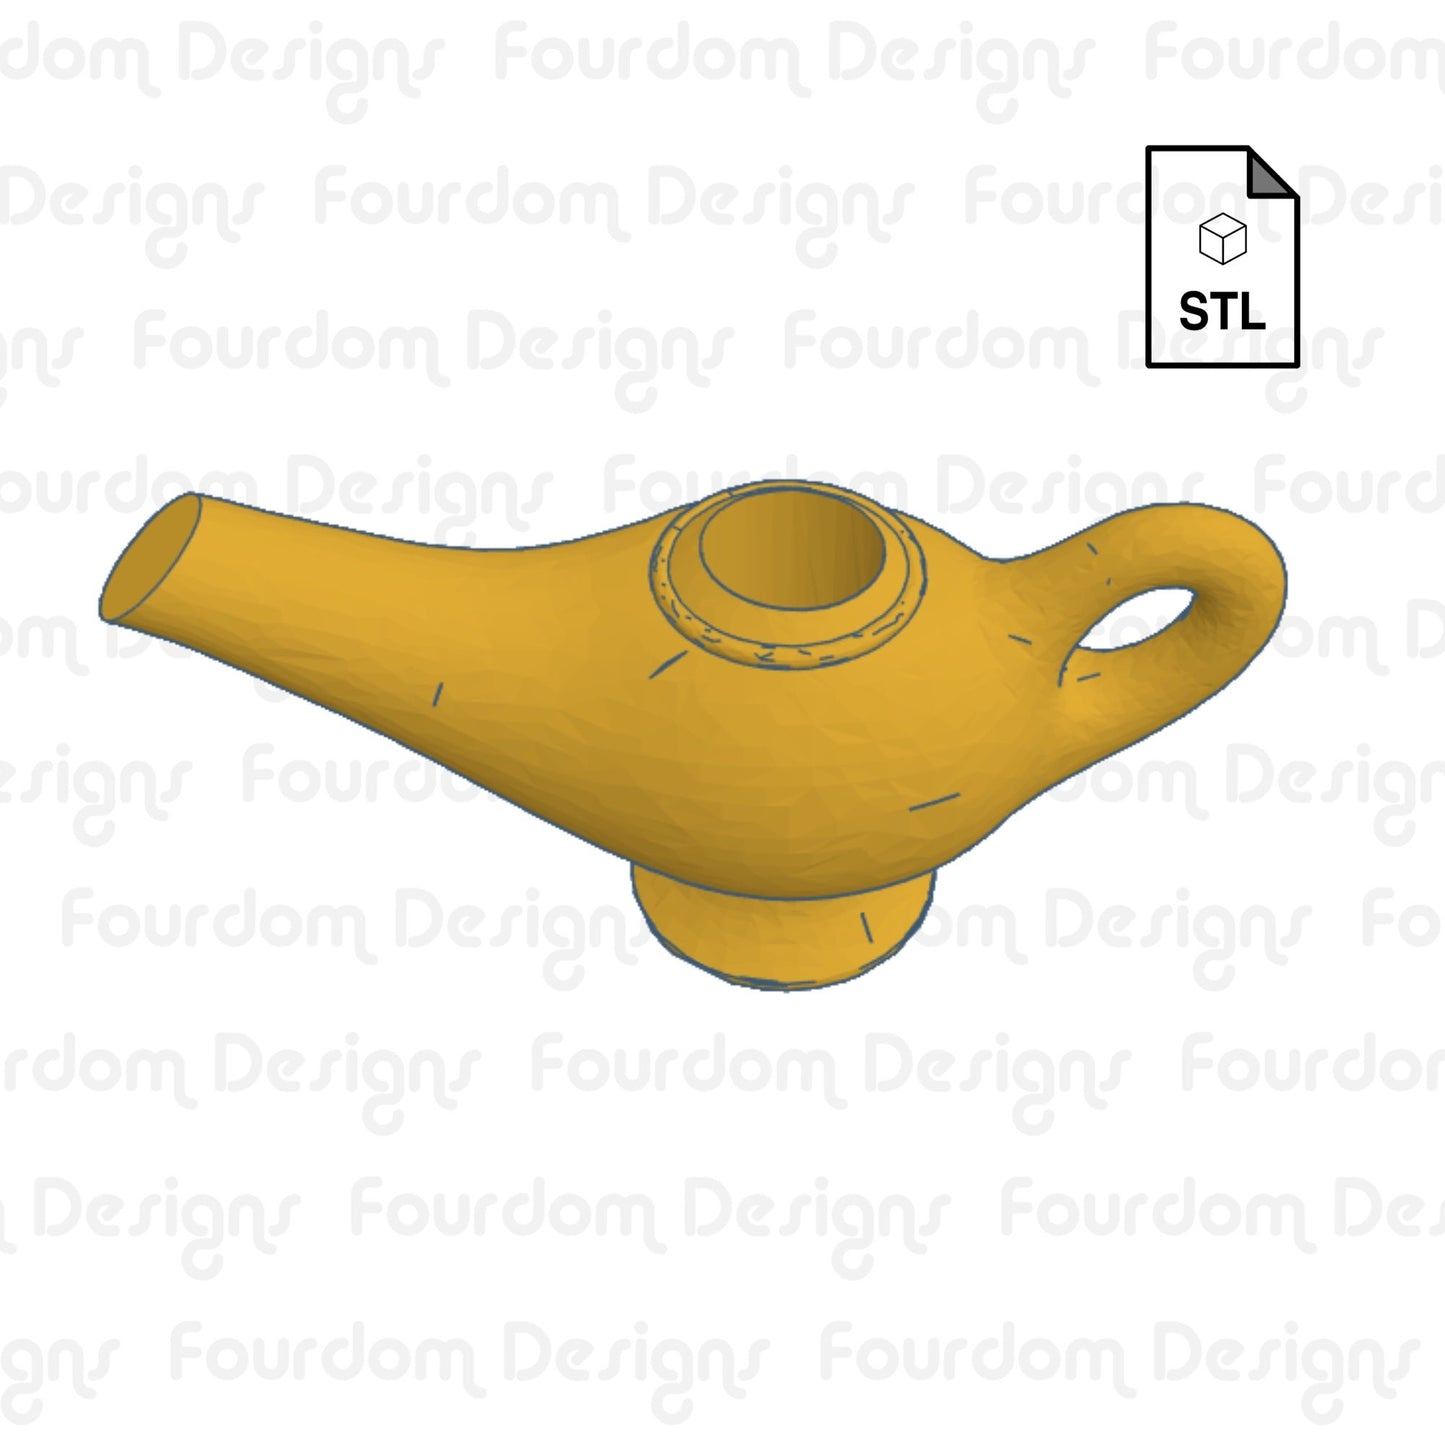 Genie Lamp Straw Topper Straw Buddy STL File for 3D Printing - Digital Download